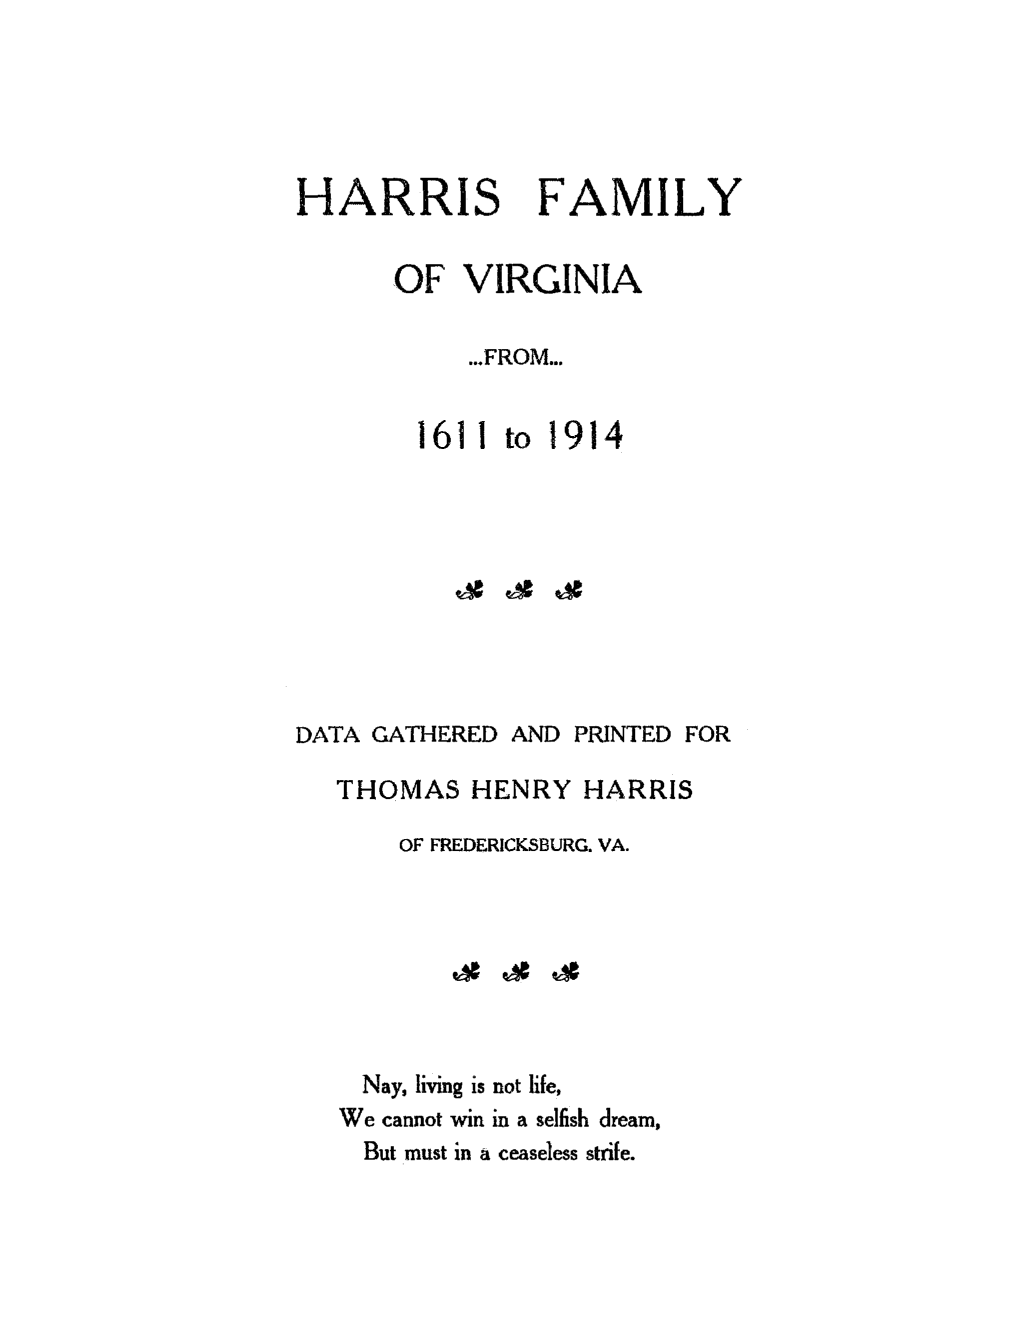 Harris Family of Virginia